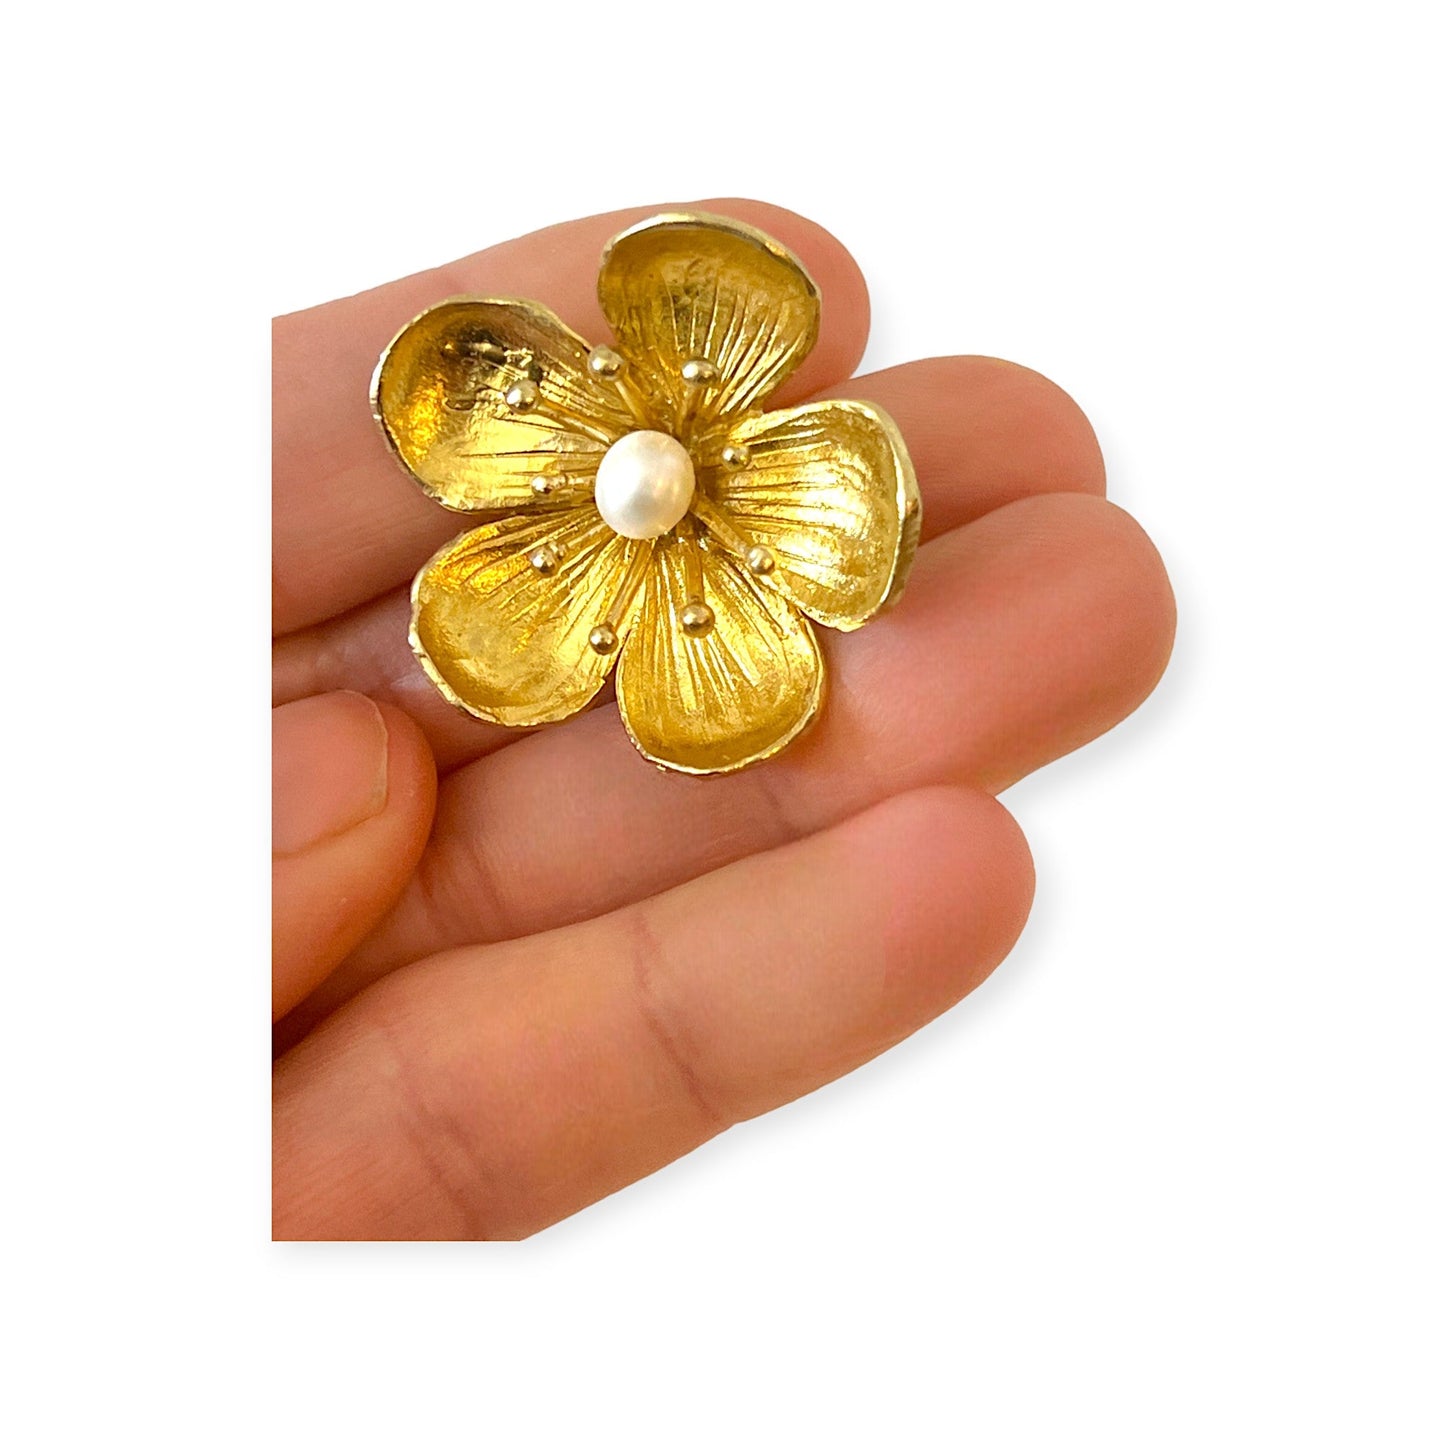 Pearl floral stud earrings - Sundara Joon